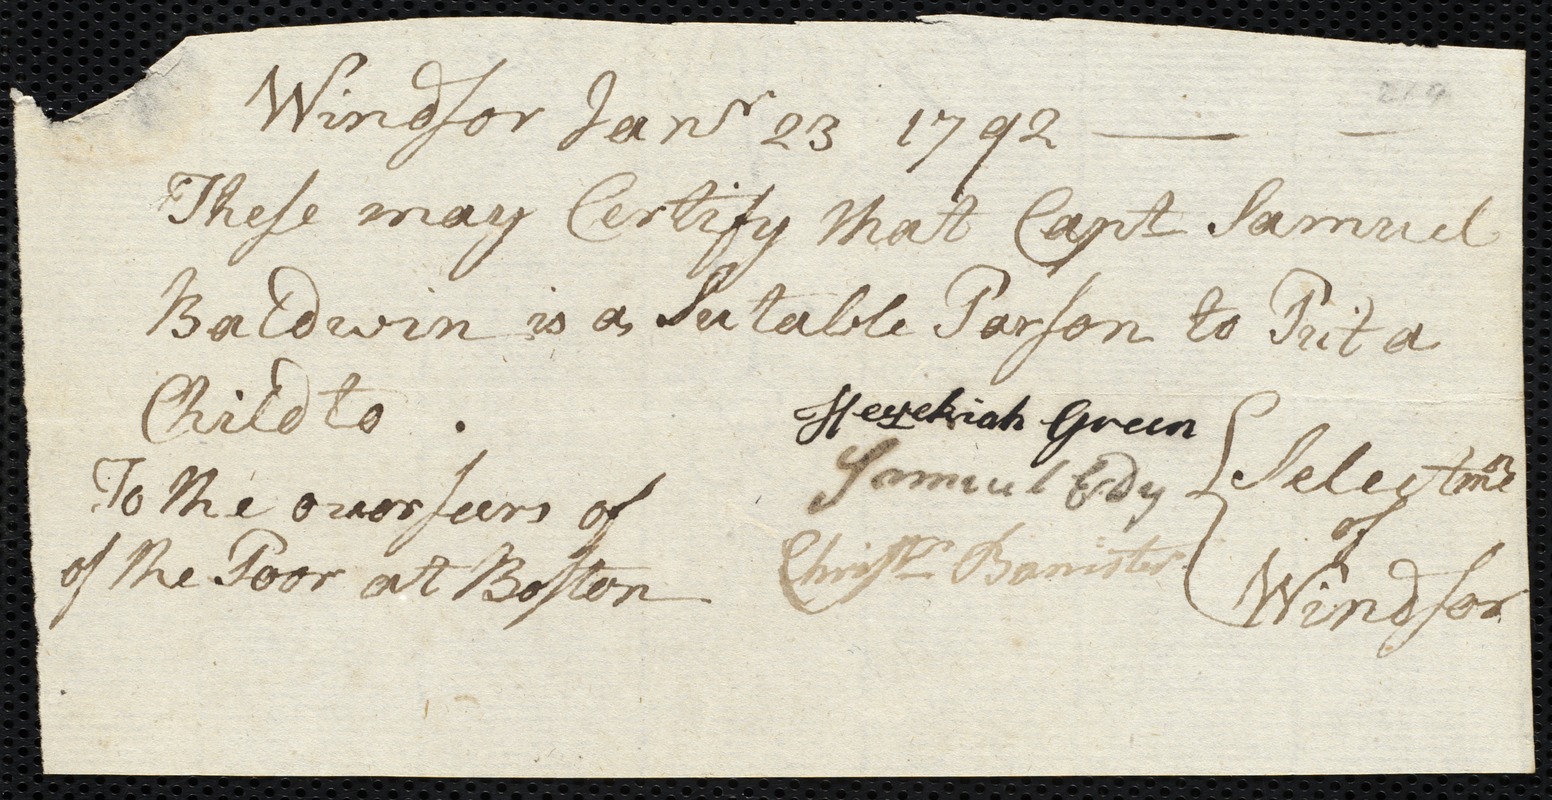 William Stephens indentured to apprentice with Samuel Baldwin of Windsor, 31 January 1792